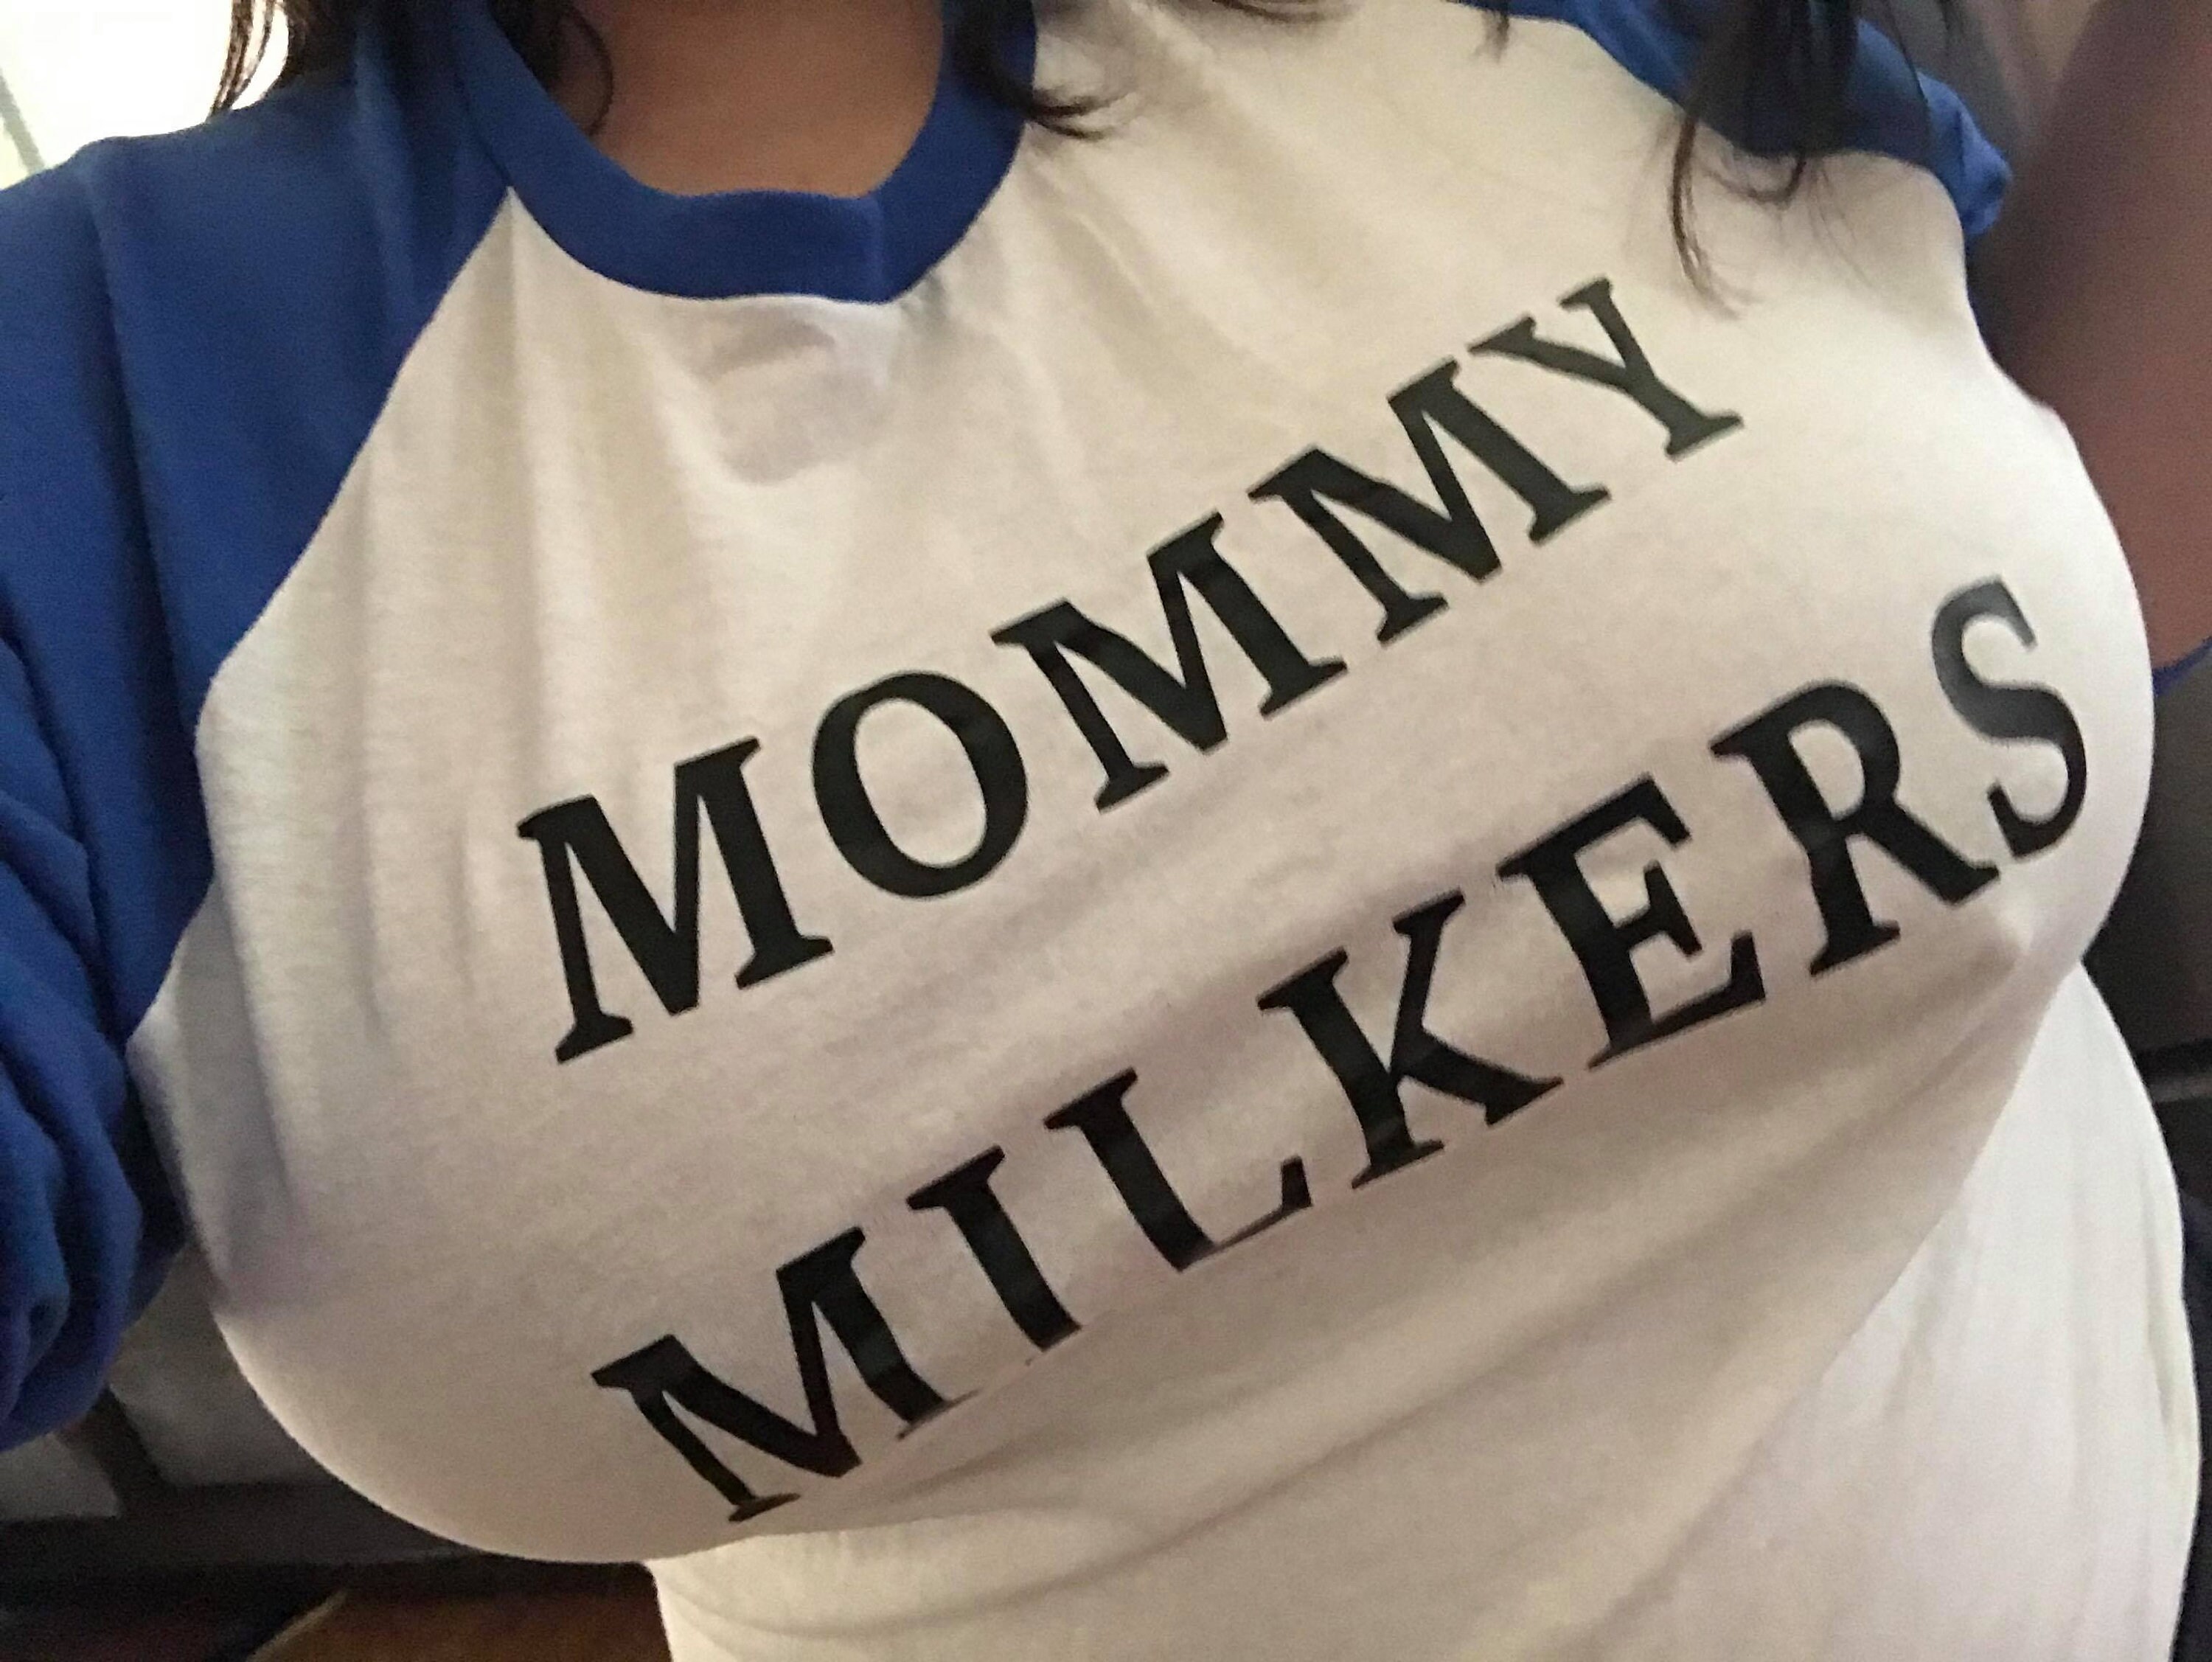 Momma milkers